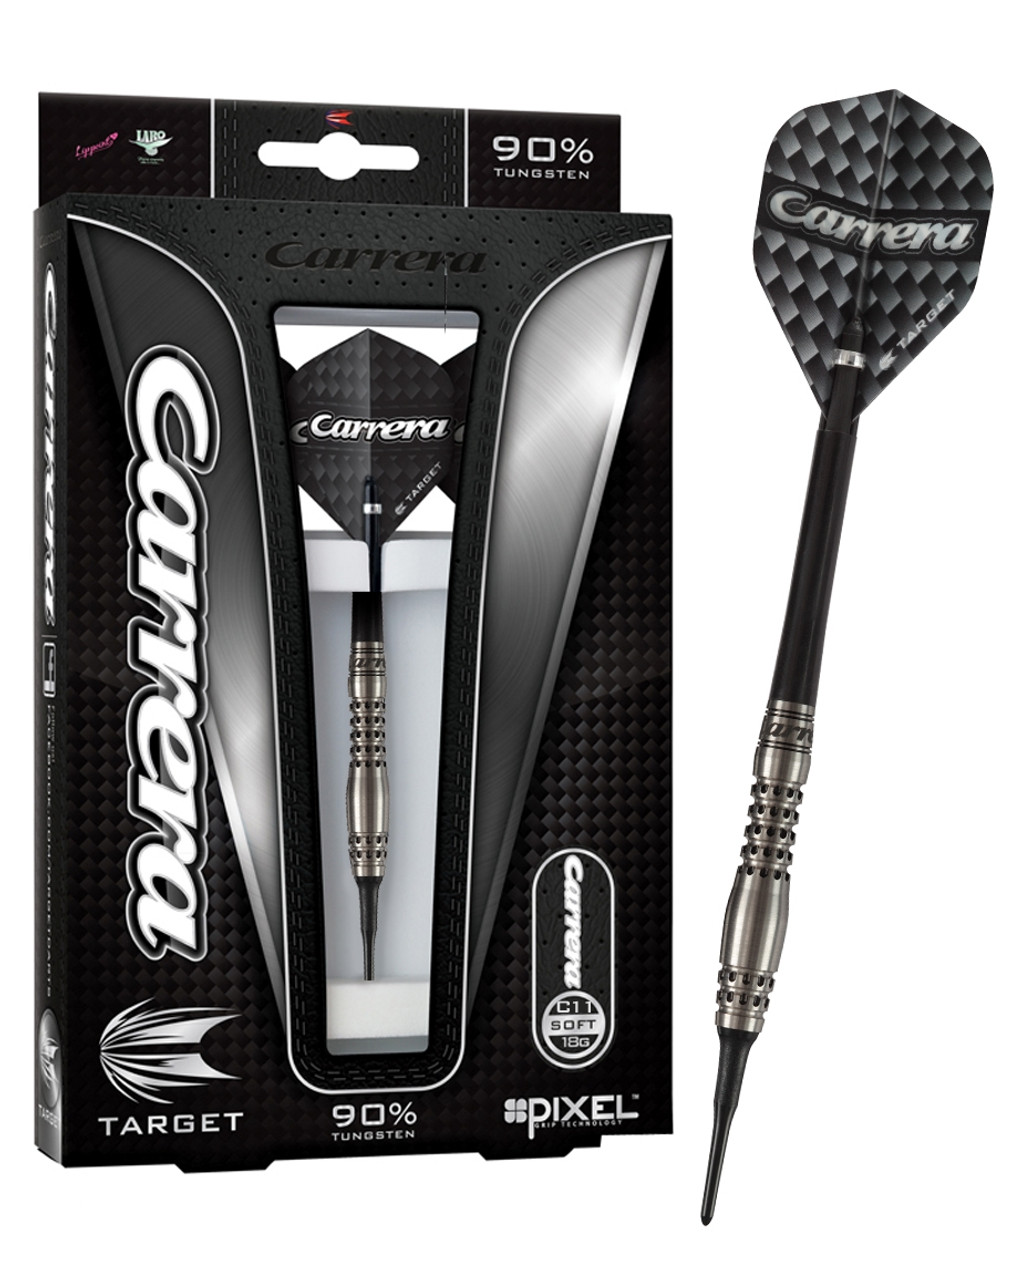 Carrera C11 Soft Tip Darts | 18g, 2ba Threads | Target Darts